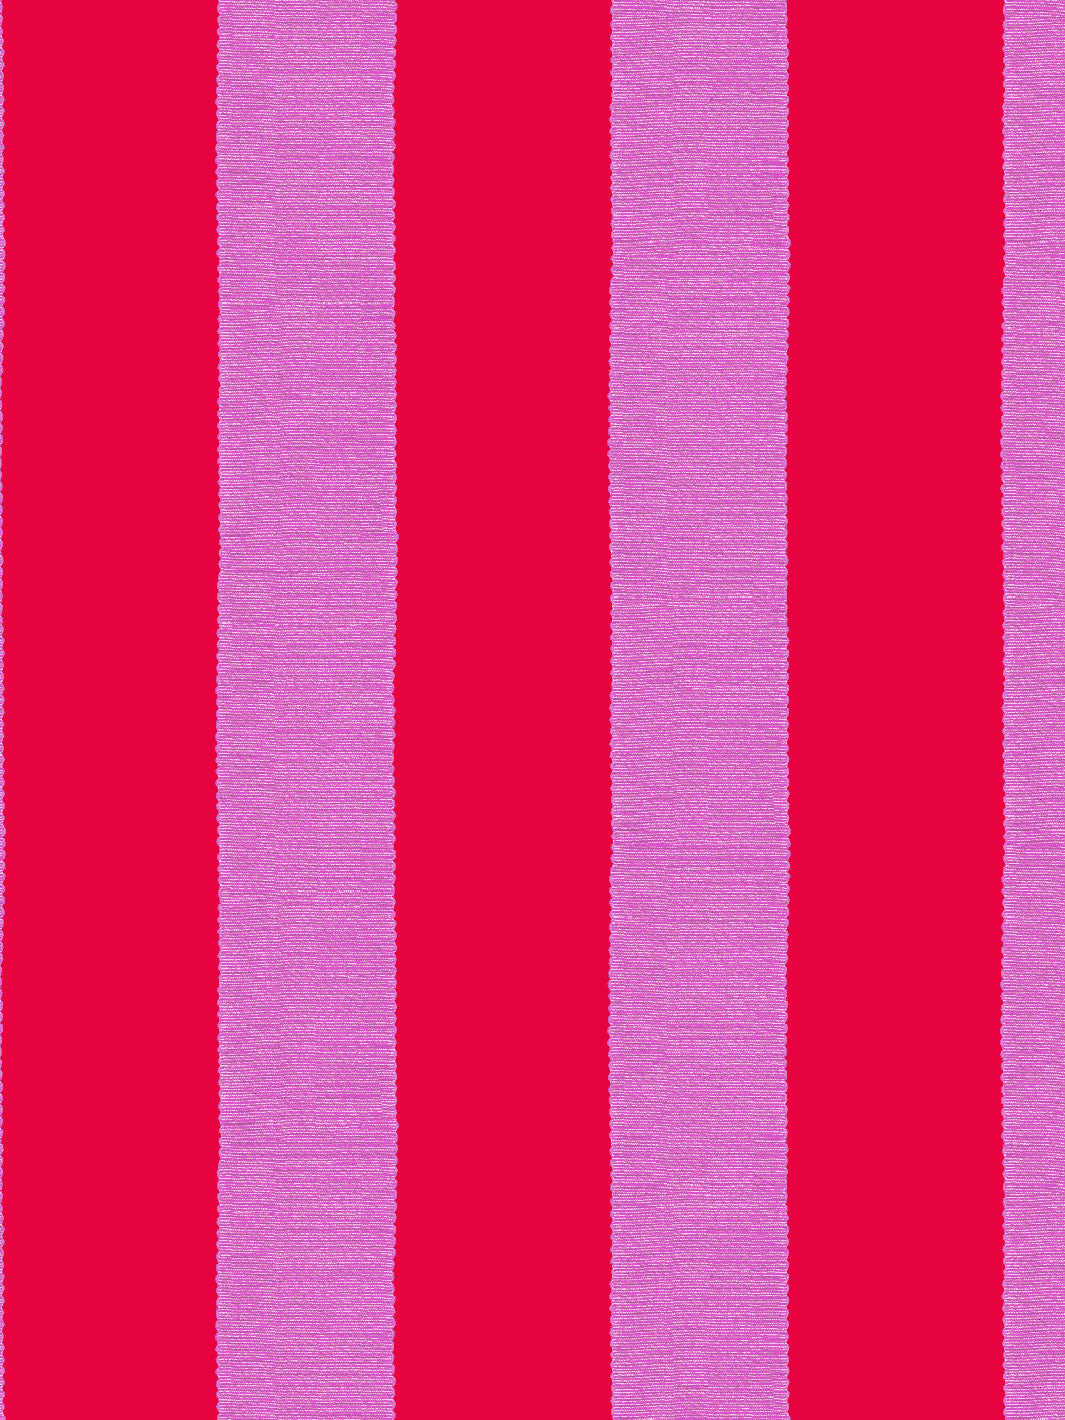 'Grosgrain Stripe' Wallpaper by Sarah Jessica Parker - Geranium Lilac